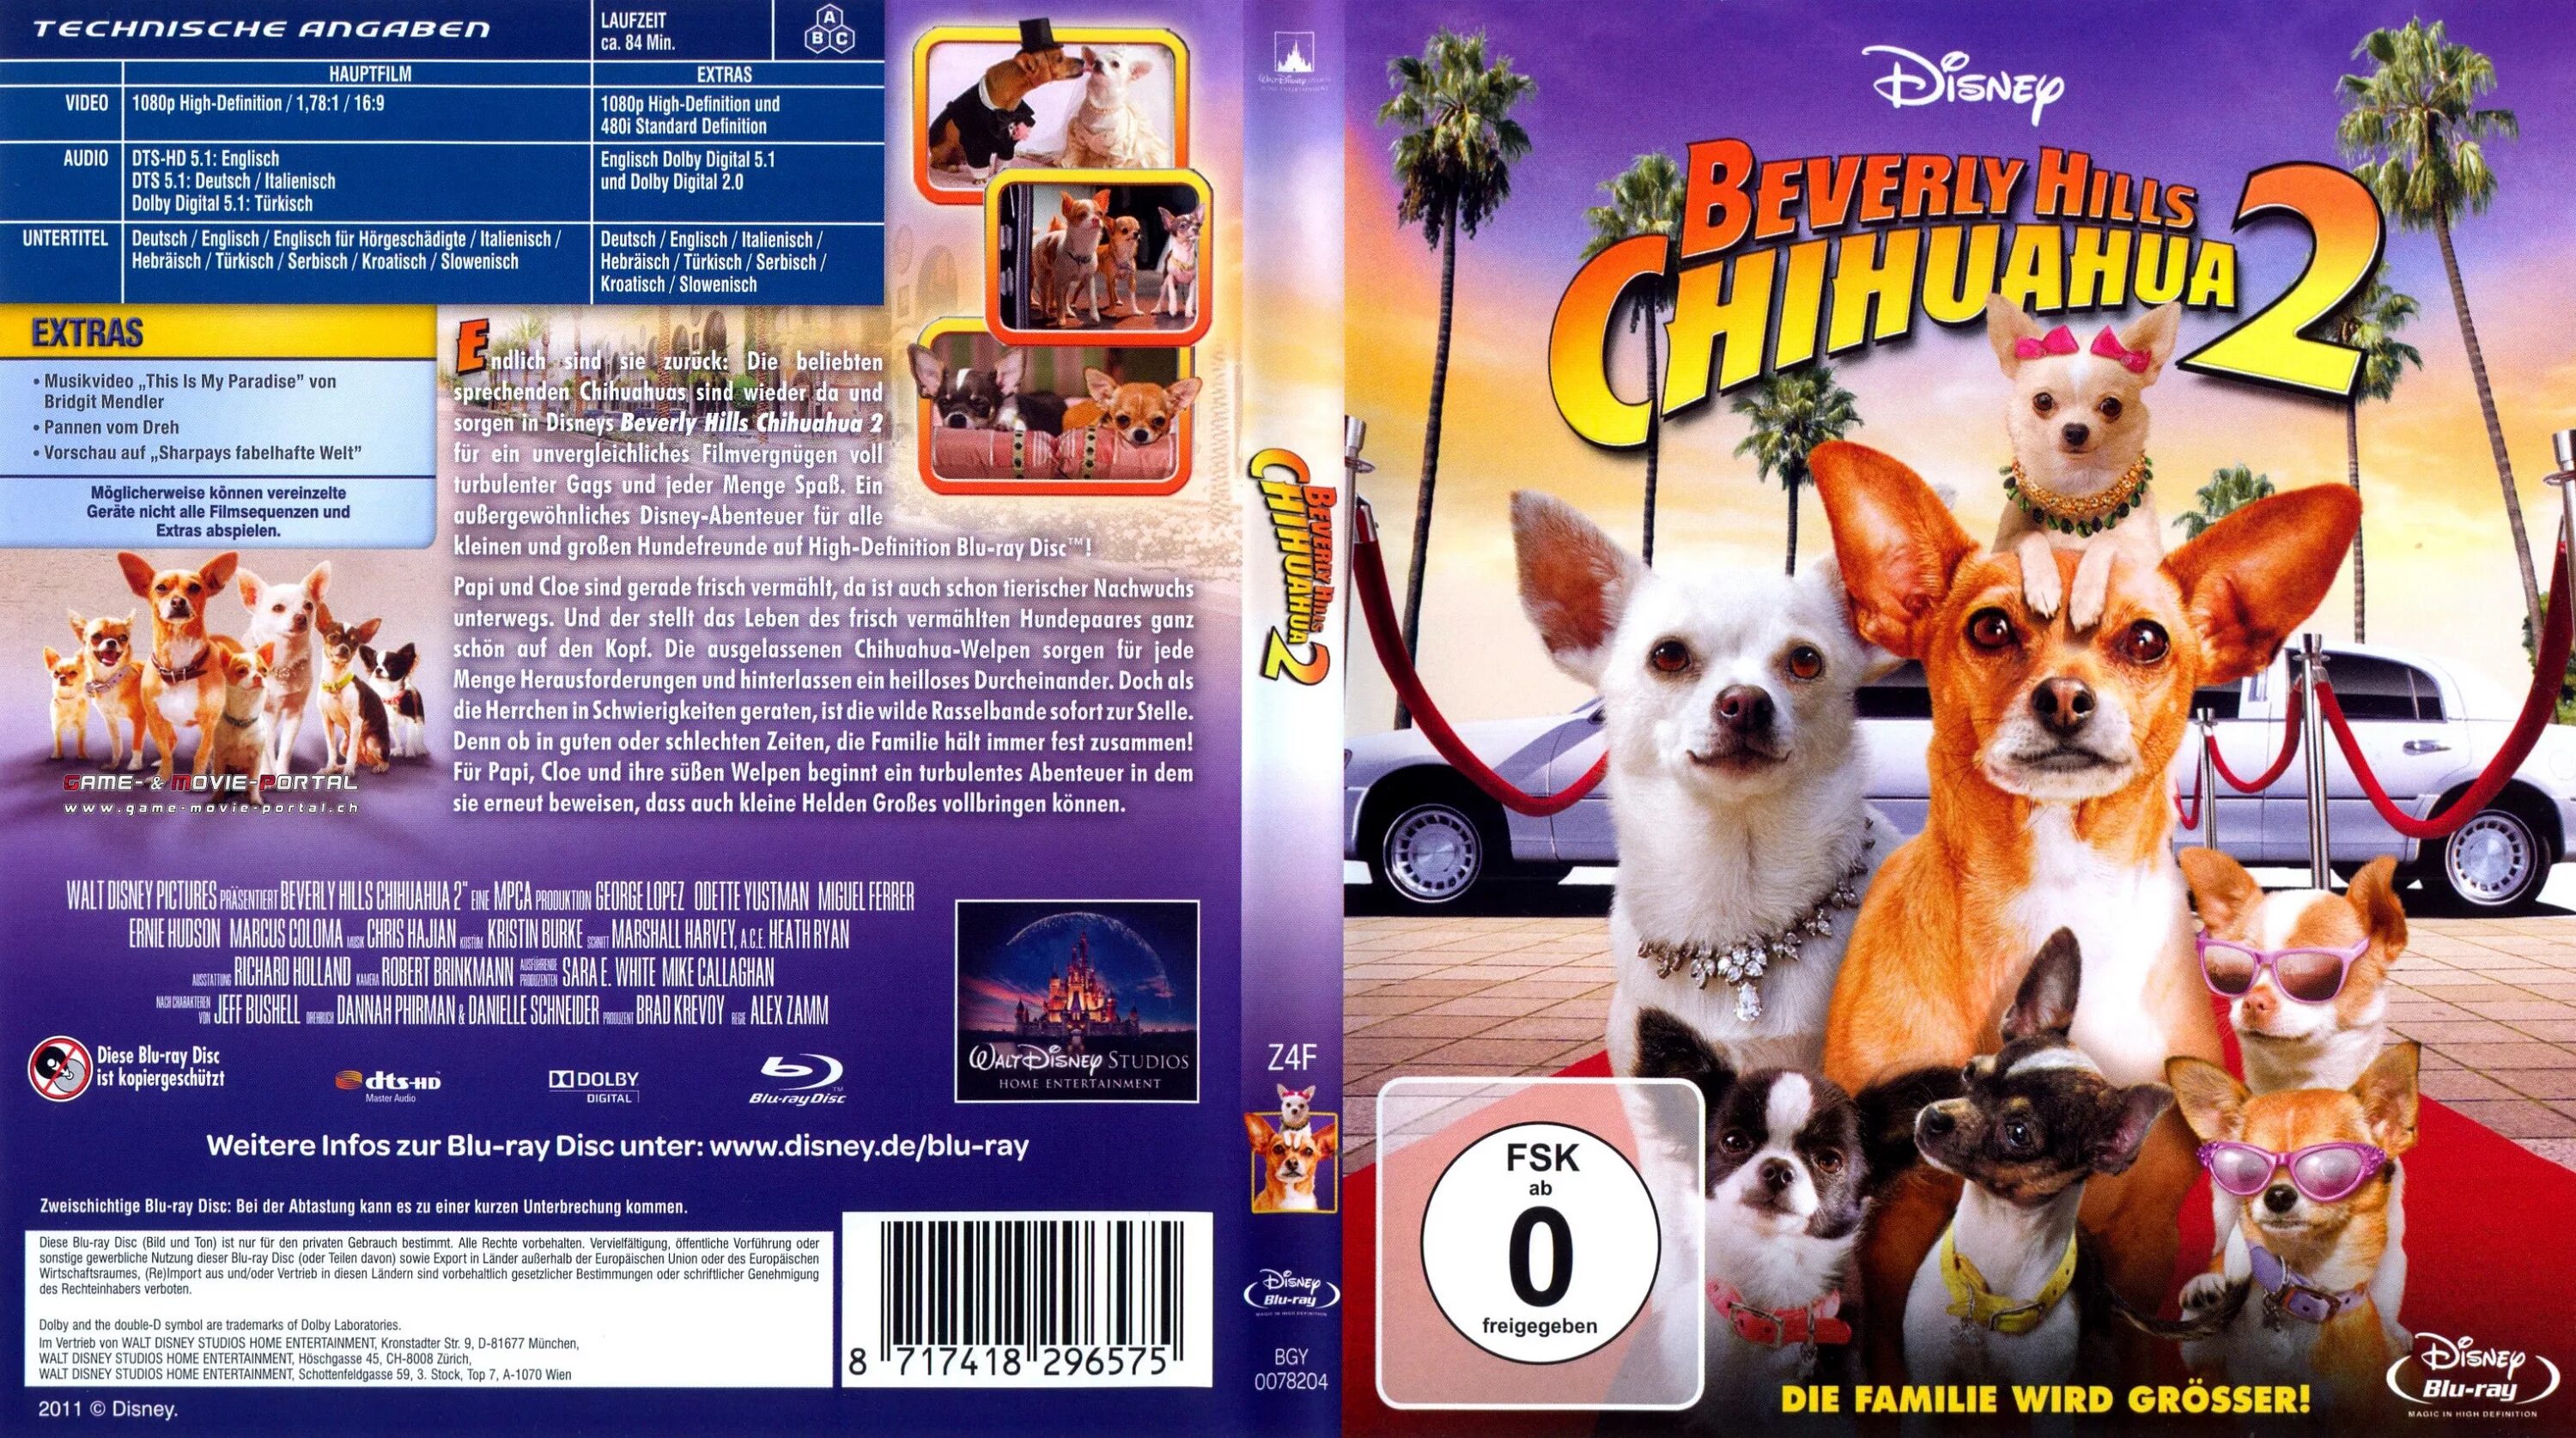 Крошка из беверли хиллз 2011. Крошка из Беверли-Хиллз DVD. Крошка из Беверли-Хиллз 2. DVD крошка из Беверли-Хиллз 3.